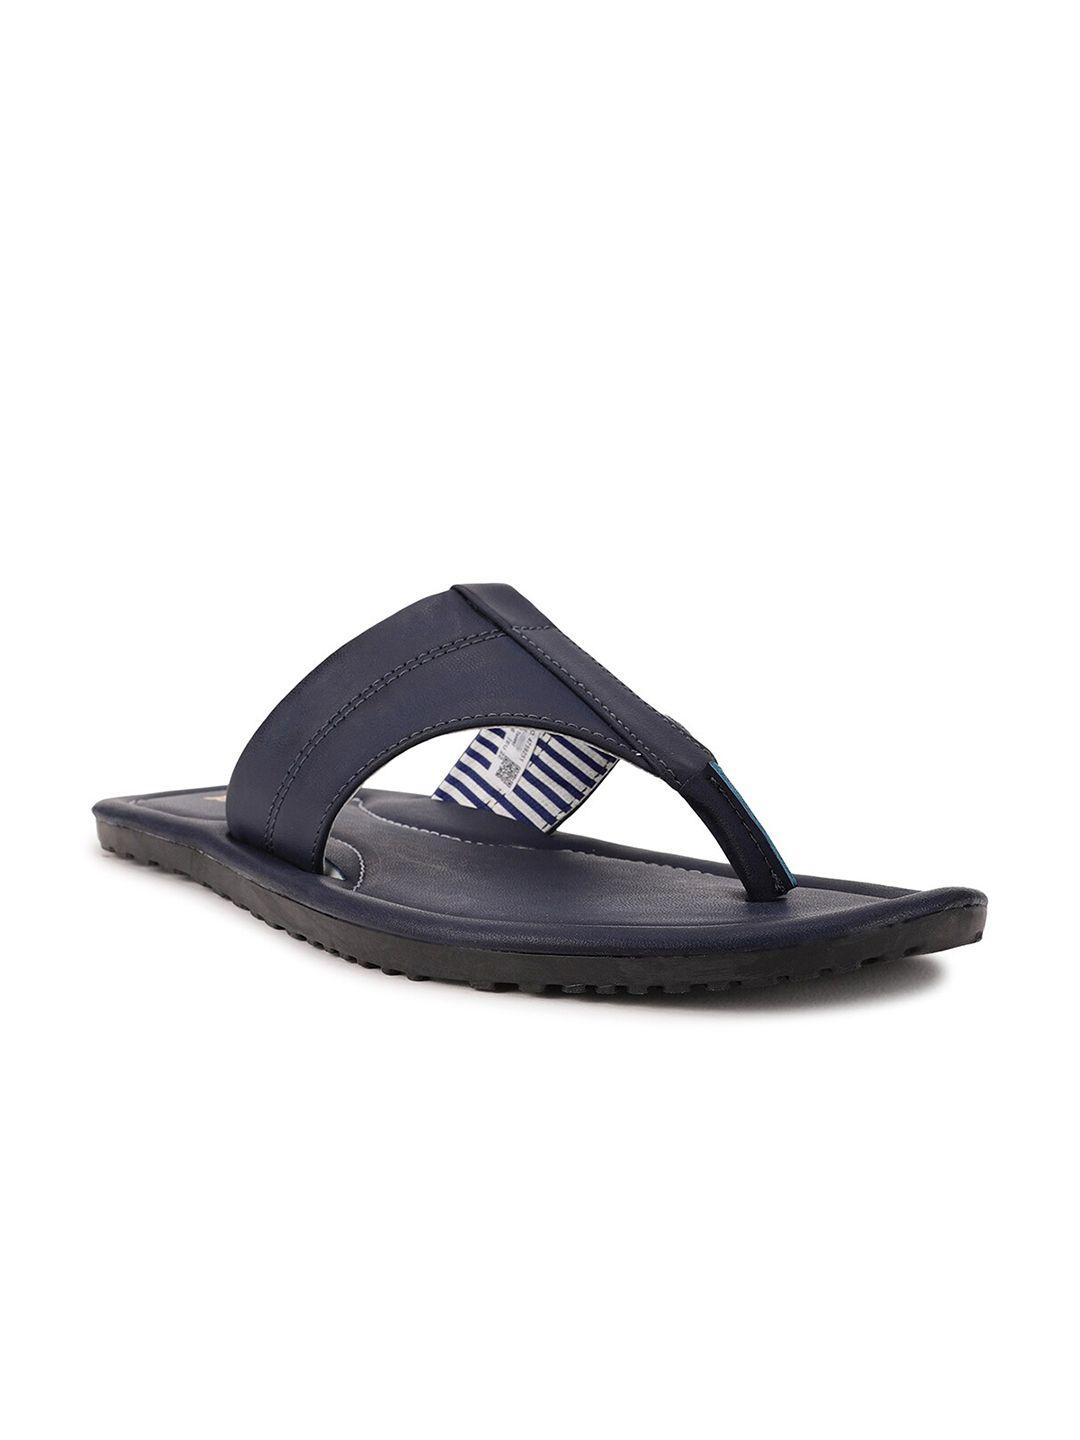 Bata Boys Navy Blue Comfort Sandals